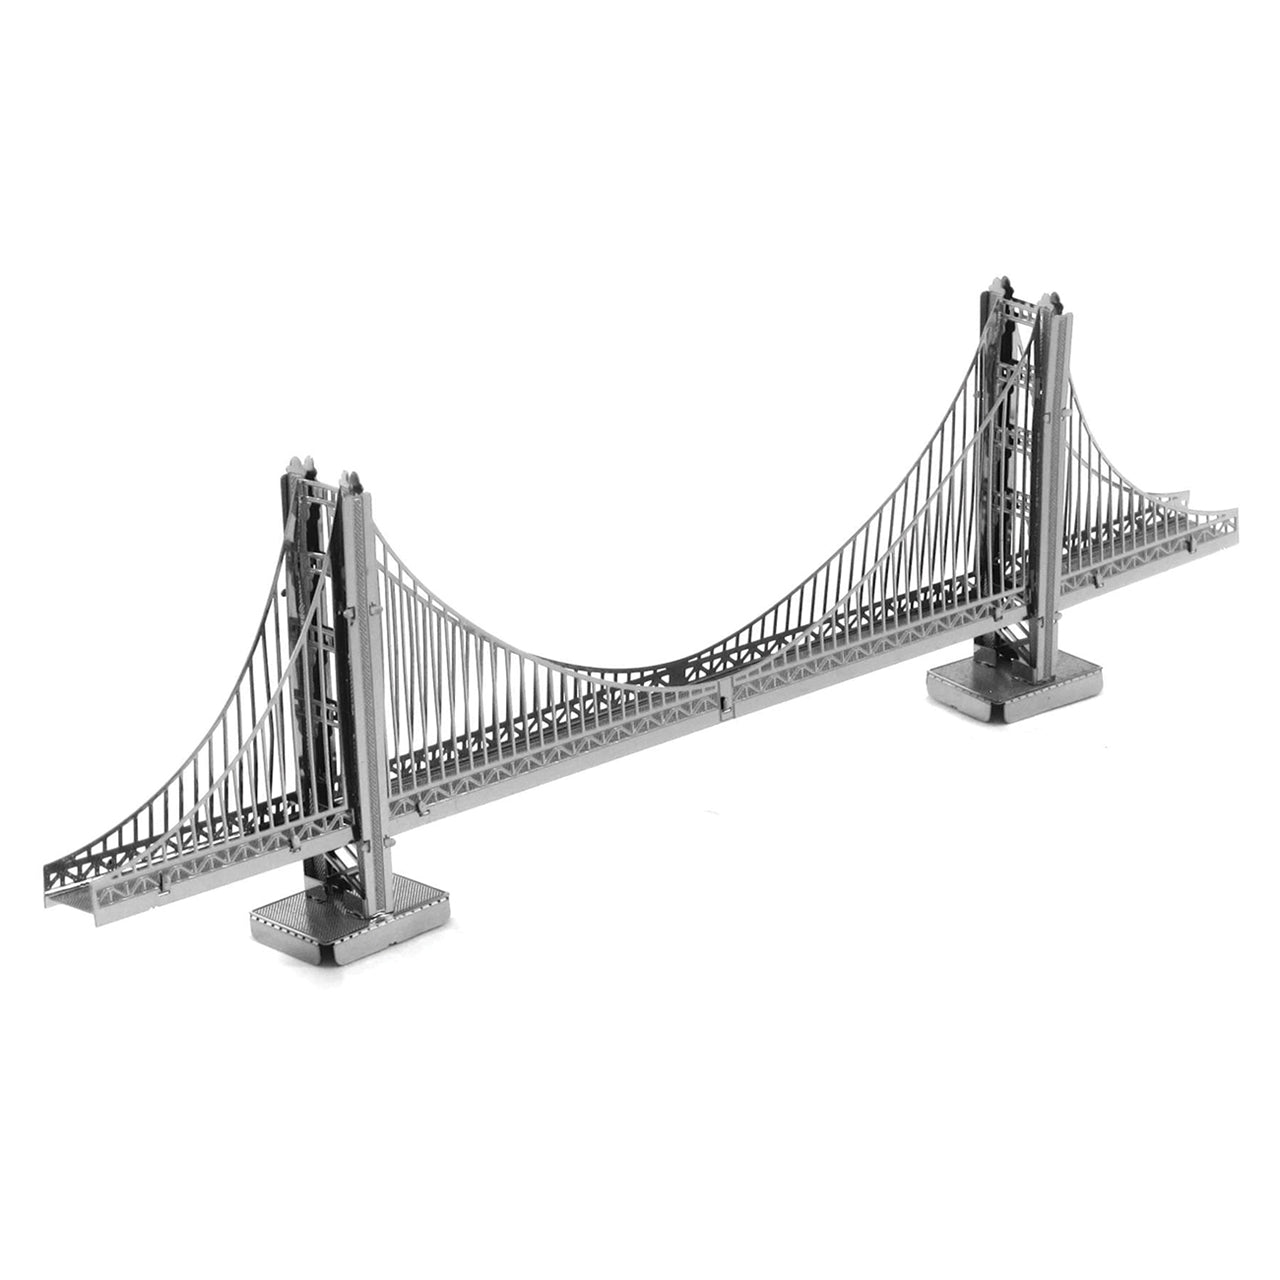 FMW001 San Francisco Golden Gate Bridge (Buildable) 